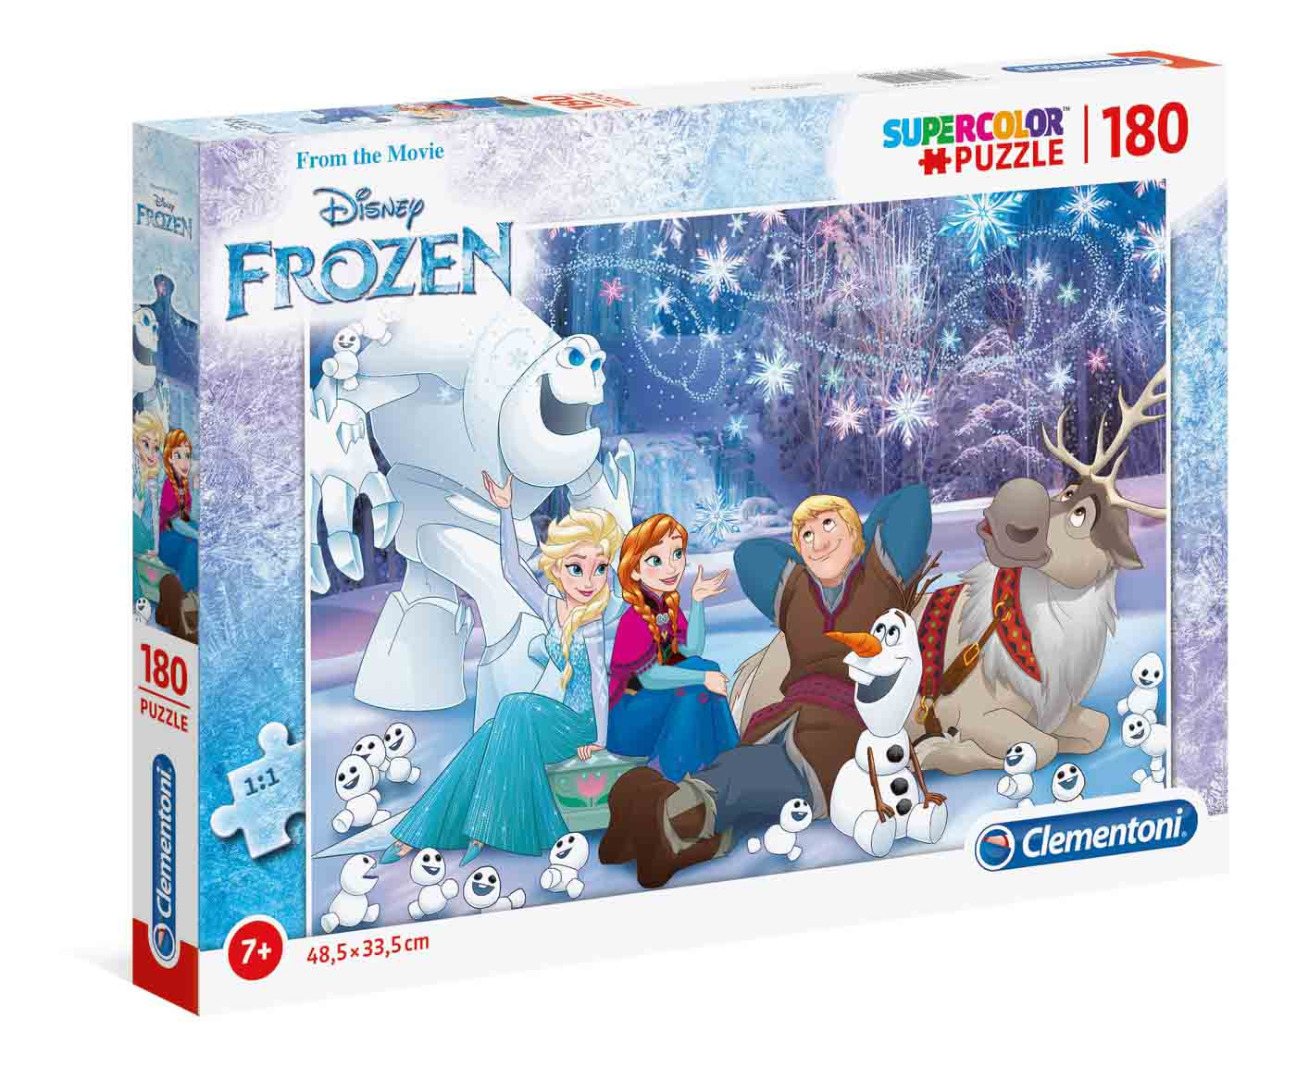 Disney Frozen - 180 peças - Supercolor Puzzle (Para mais de 7 anos)